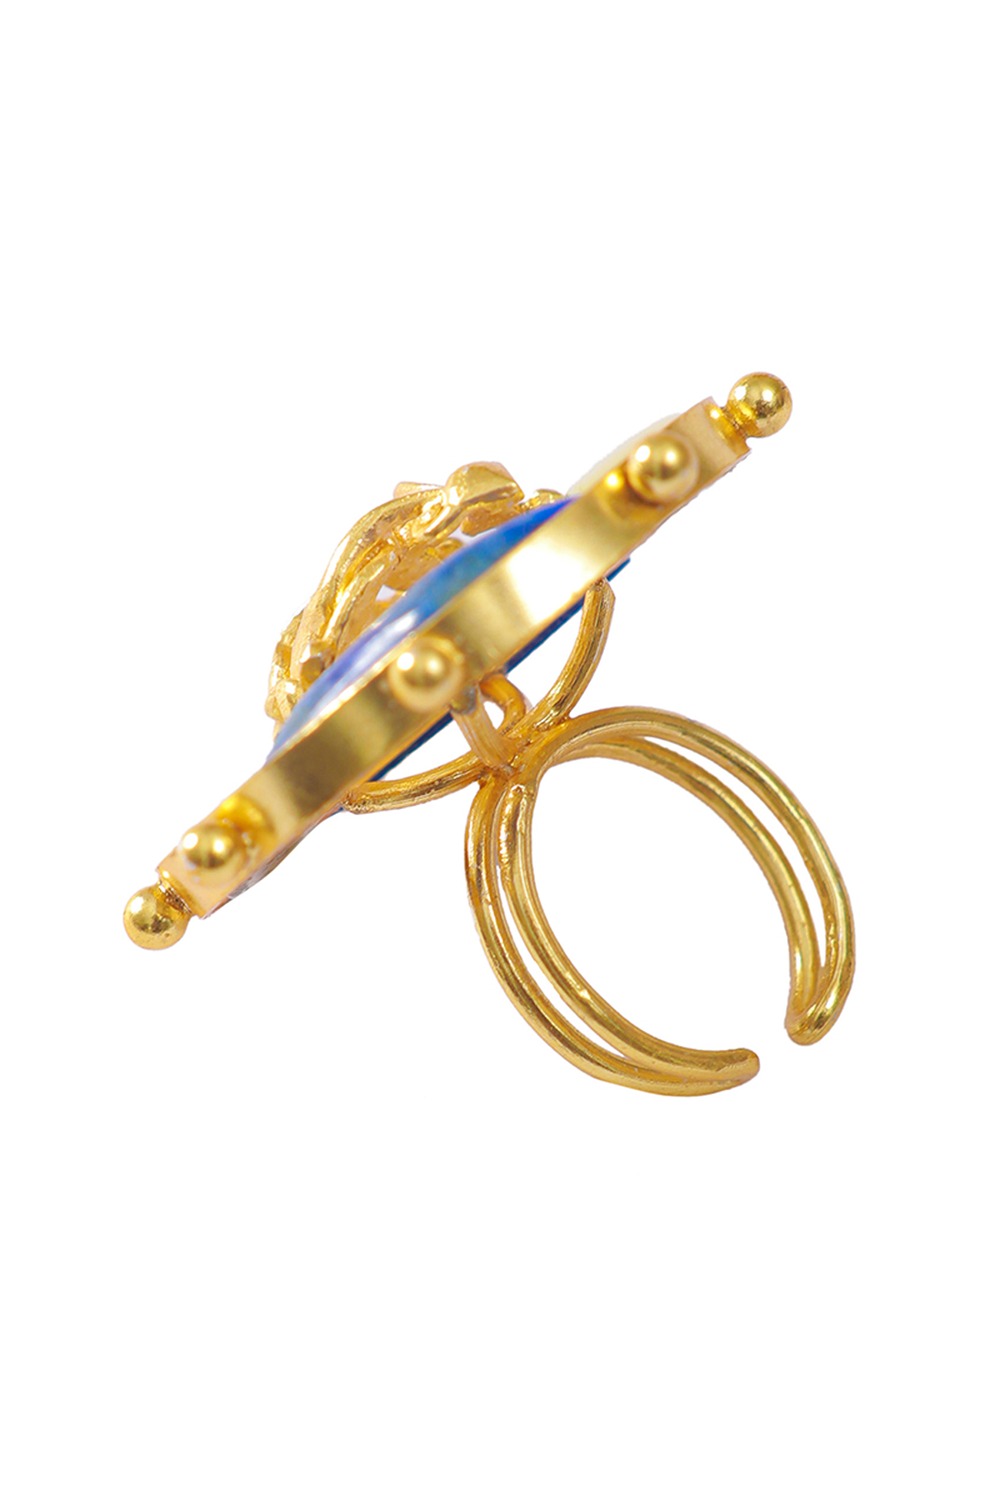 Astra Greek Ring